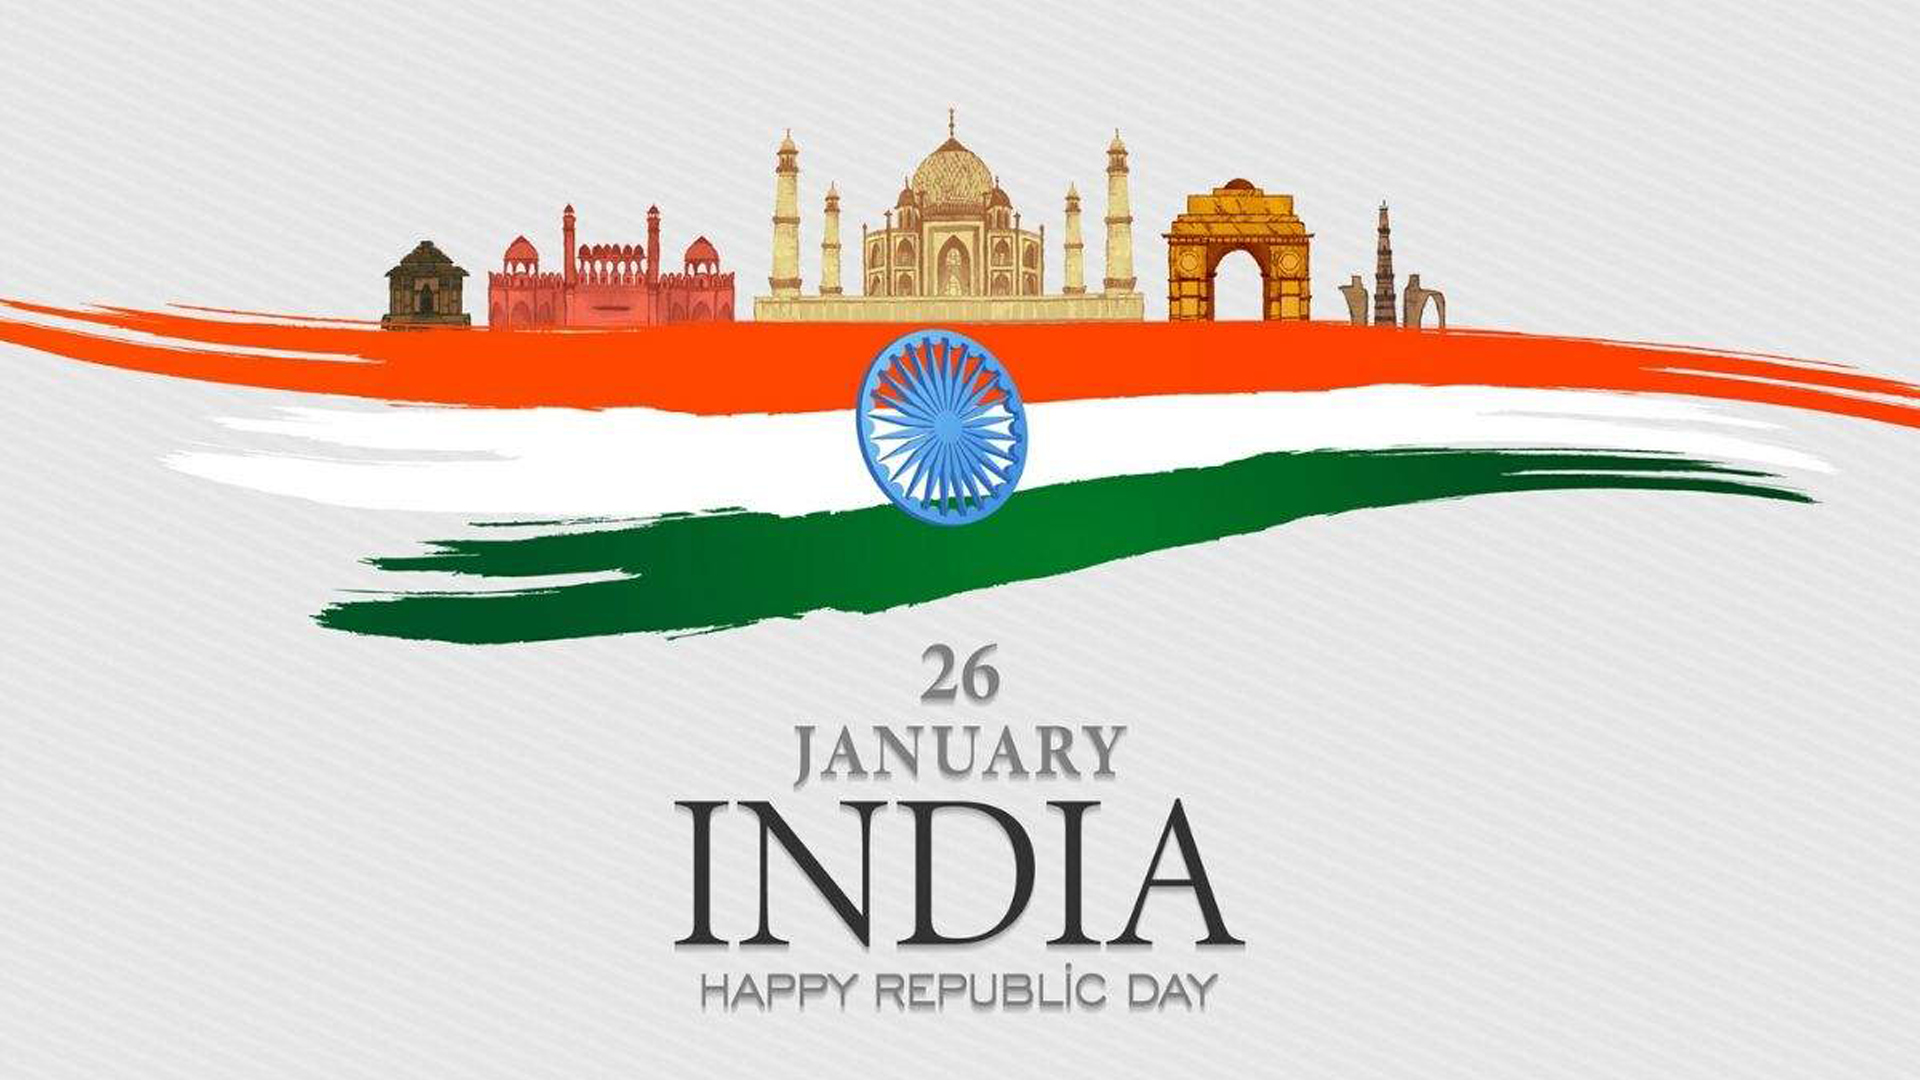 Taj Mahal Red Fort th January Indian Republic Day Celebration Flag Creative HD Republic Day